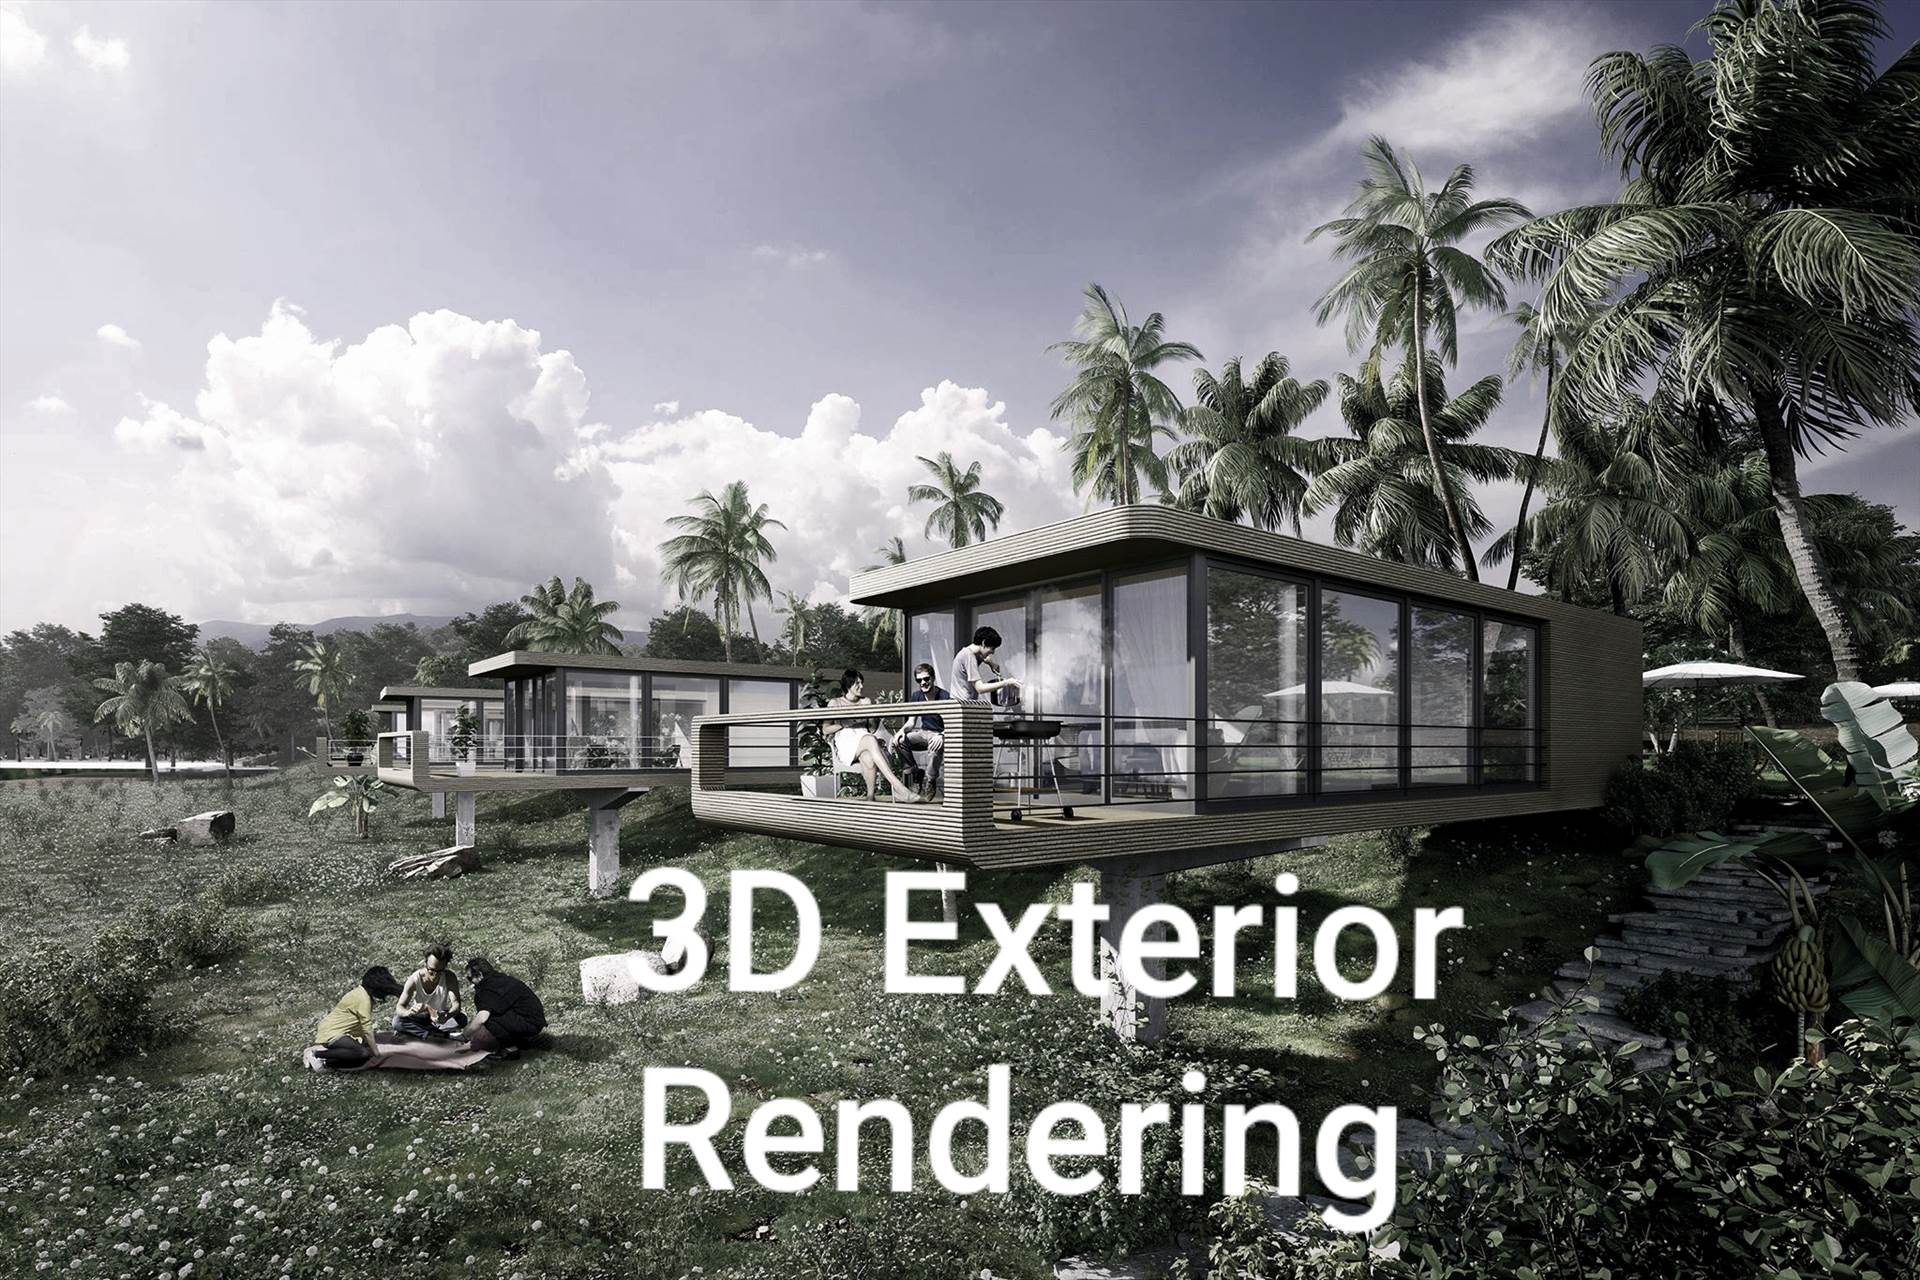 Architectural 3D Exterior Rendering Services 3D Exterior Rendering Services by JMSDCONSULTANT